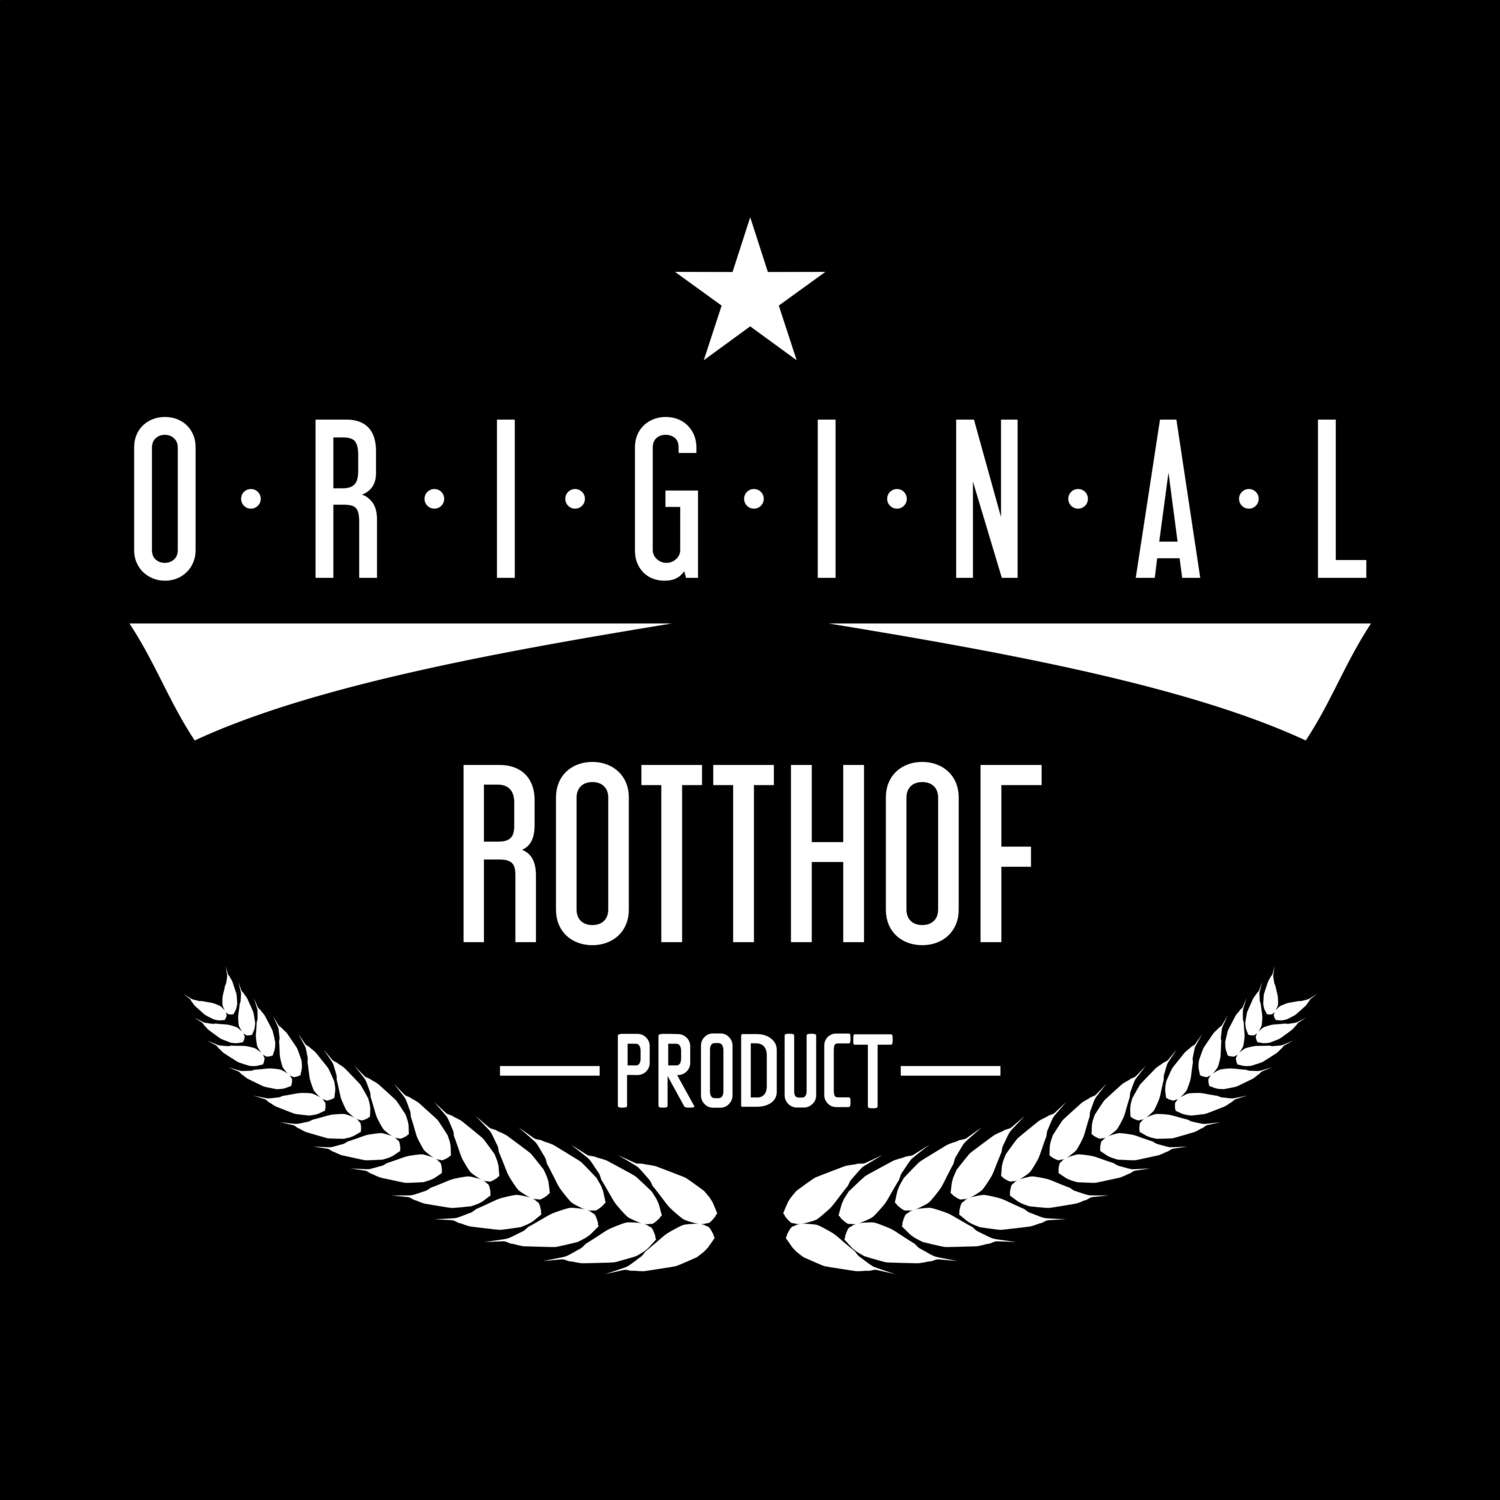 Rotthof T-Shirt »Original Product«